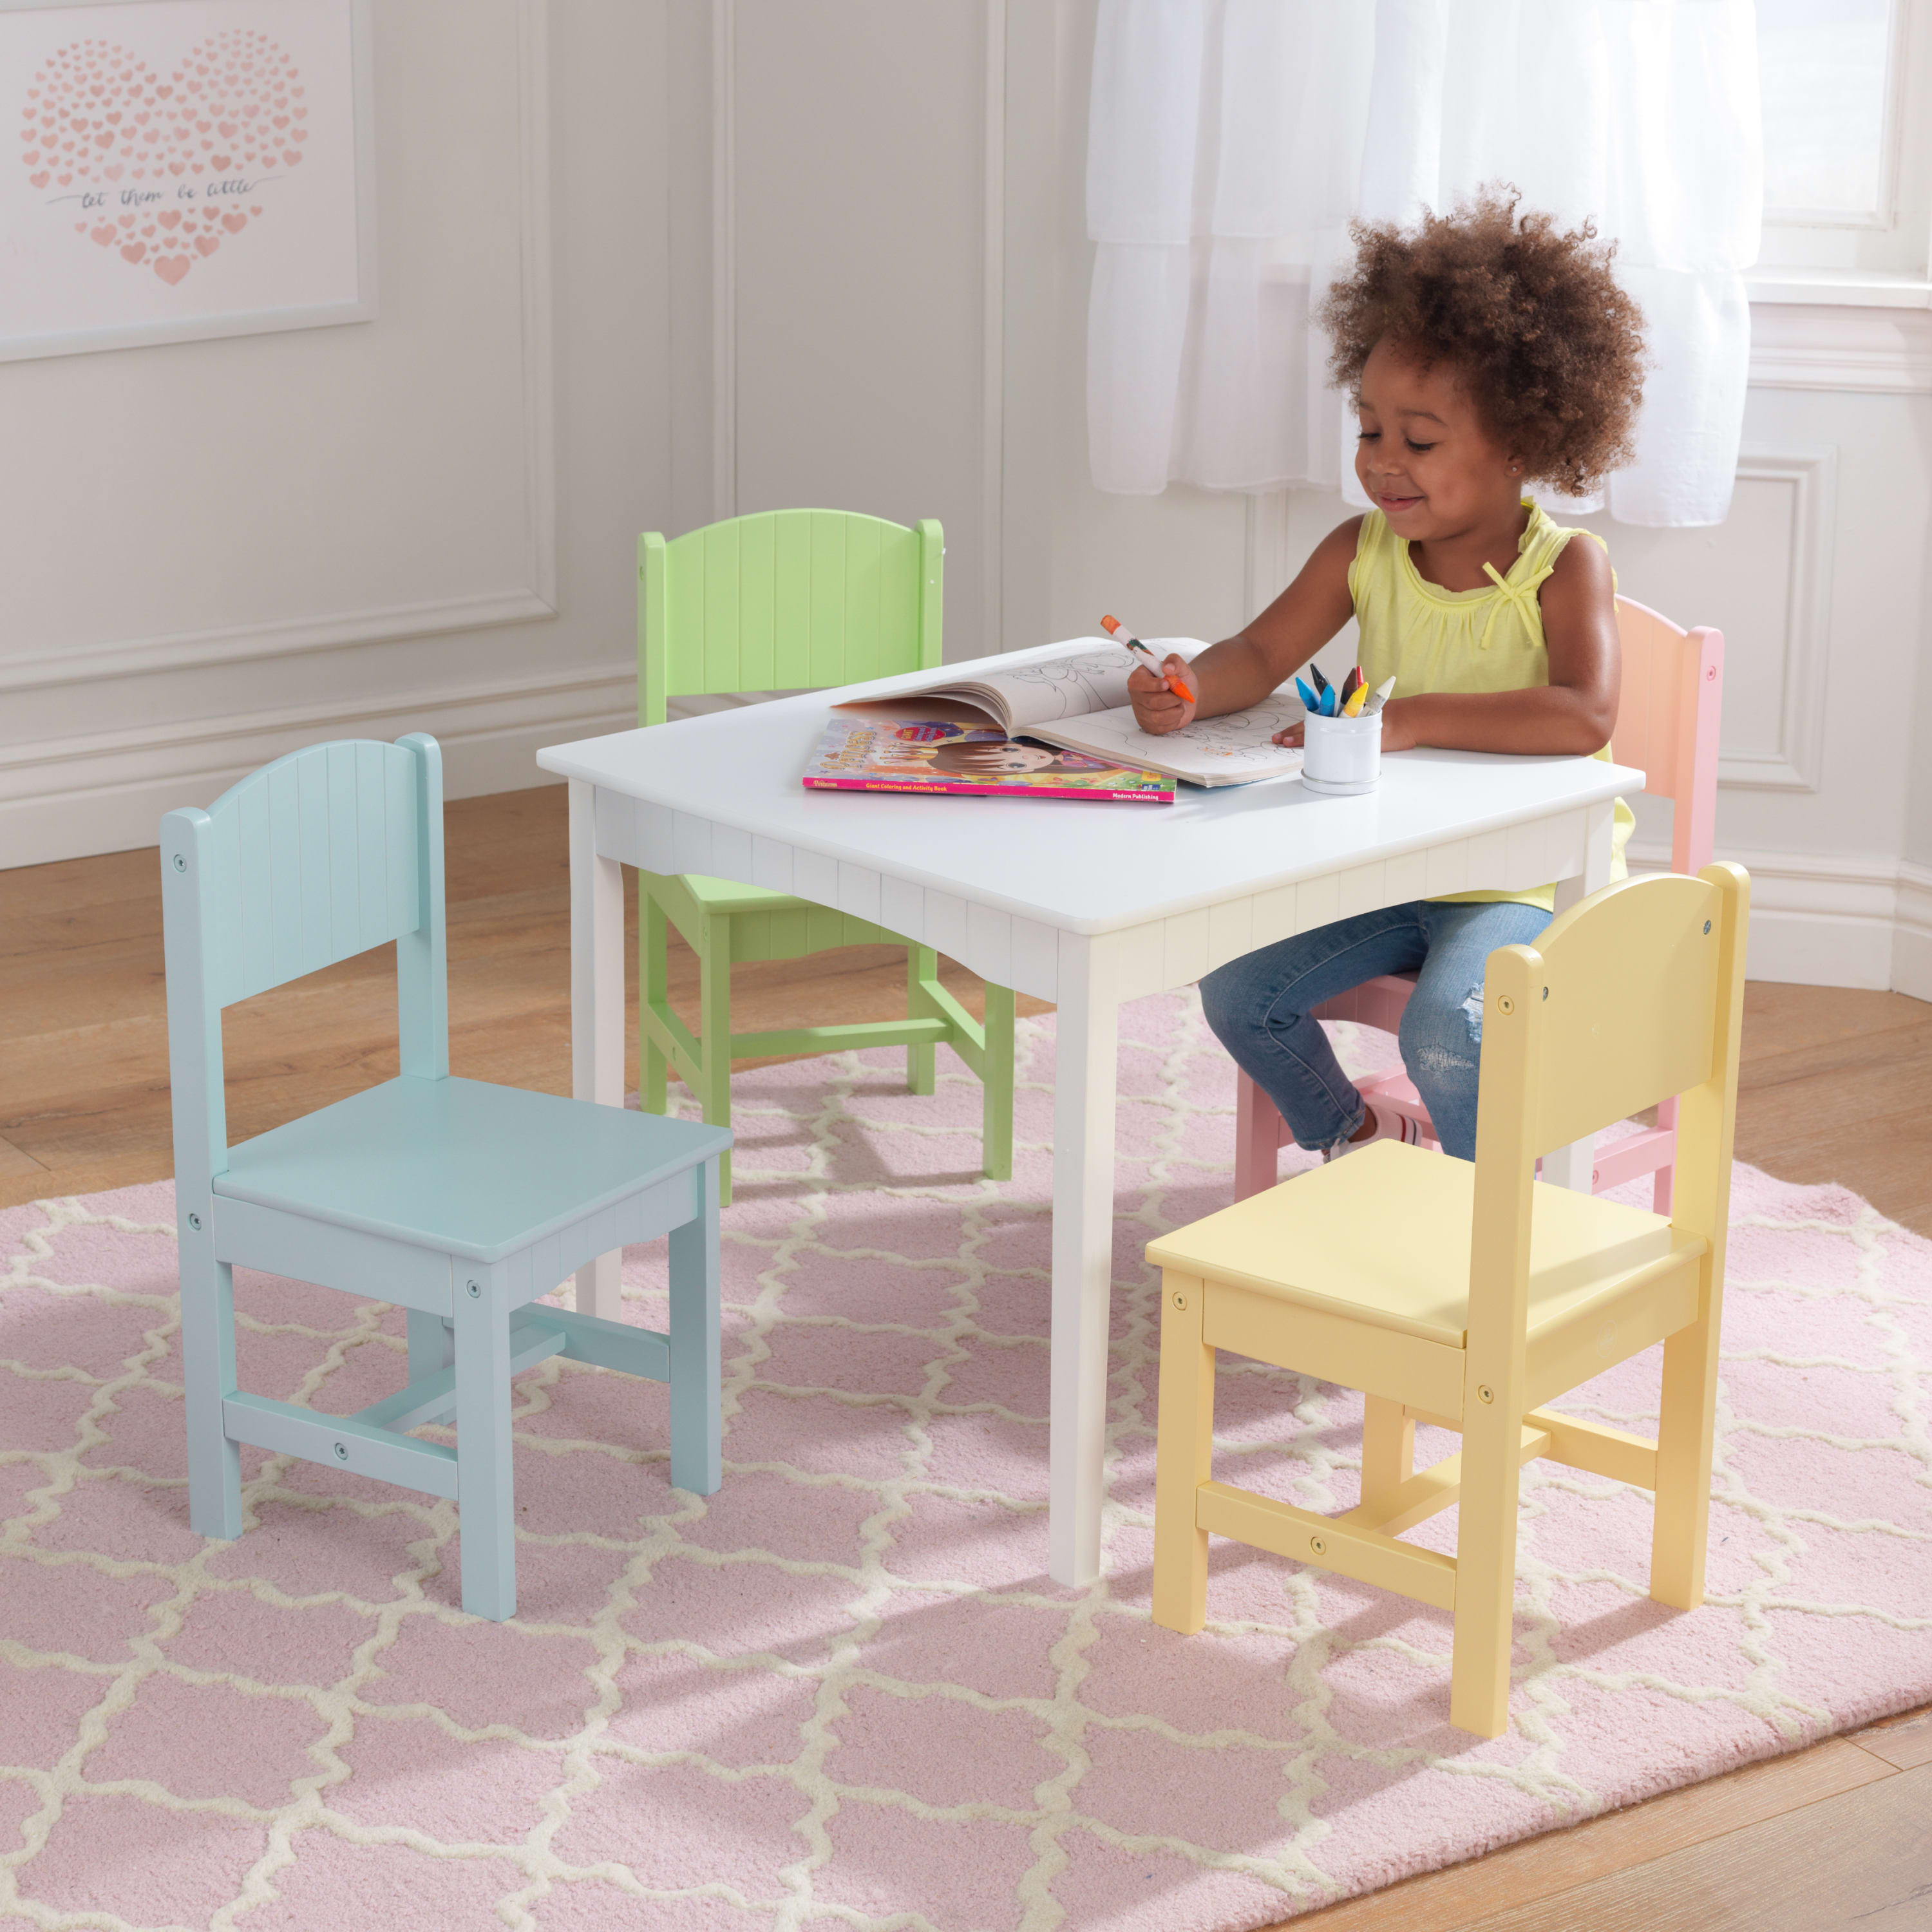 KidKraft Nantucket Children's Wooden Table & 4 Chair Set, Pastel Colors - image 2 of 9